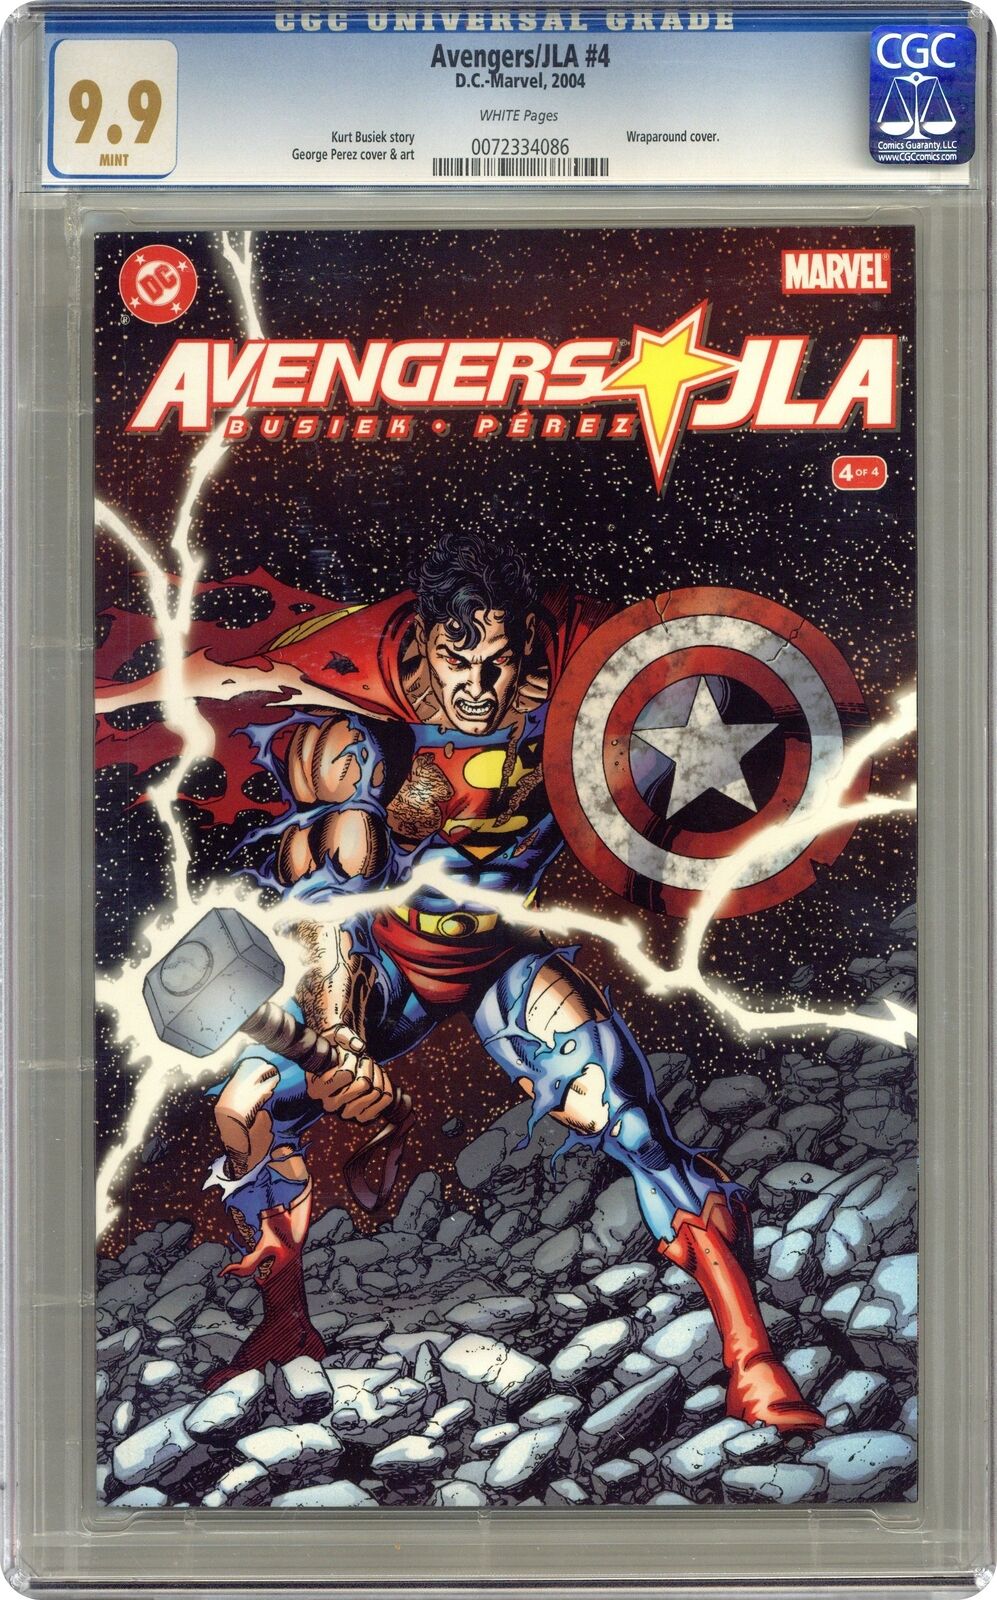 JLA Avengers #4 CGC 9.9 2004 0072334086